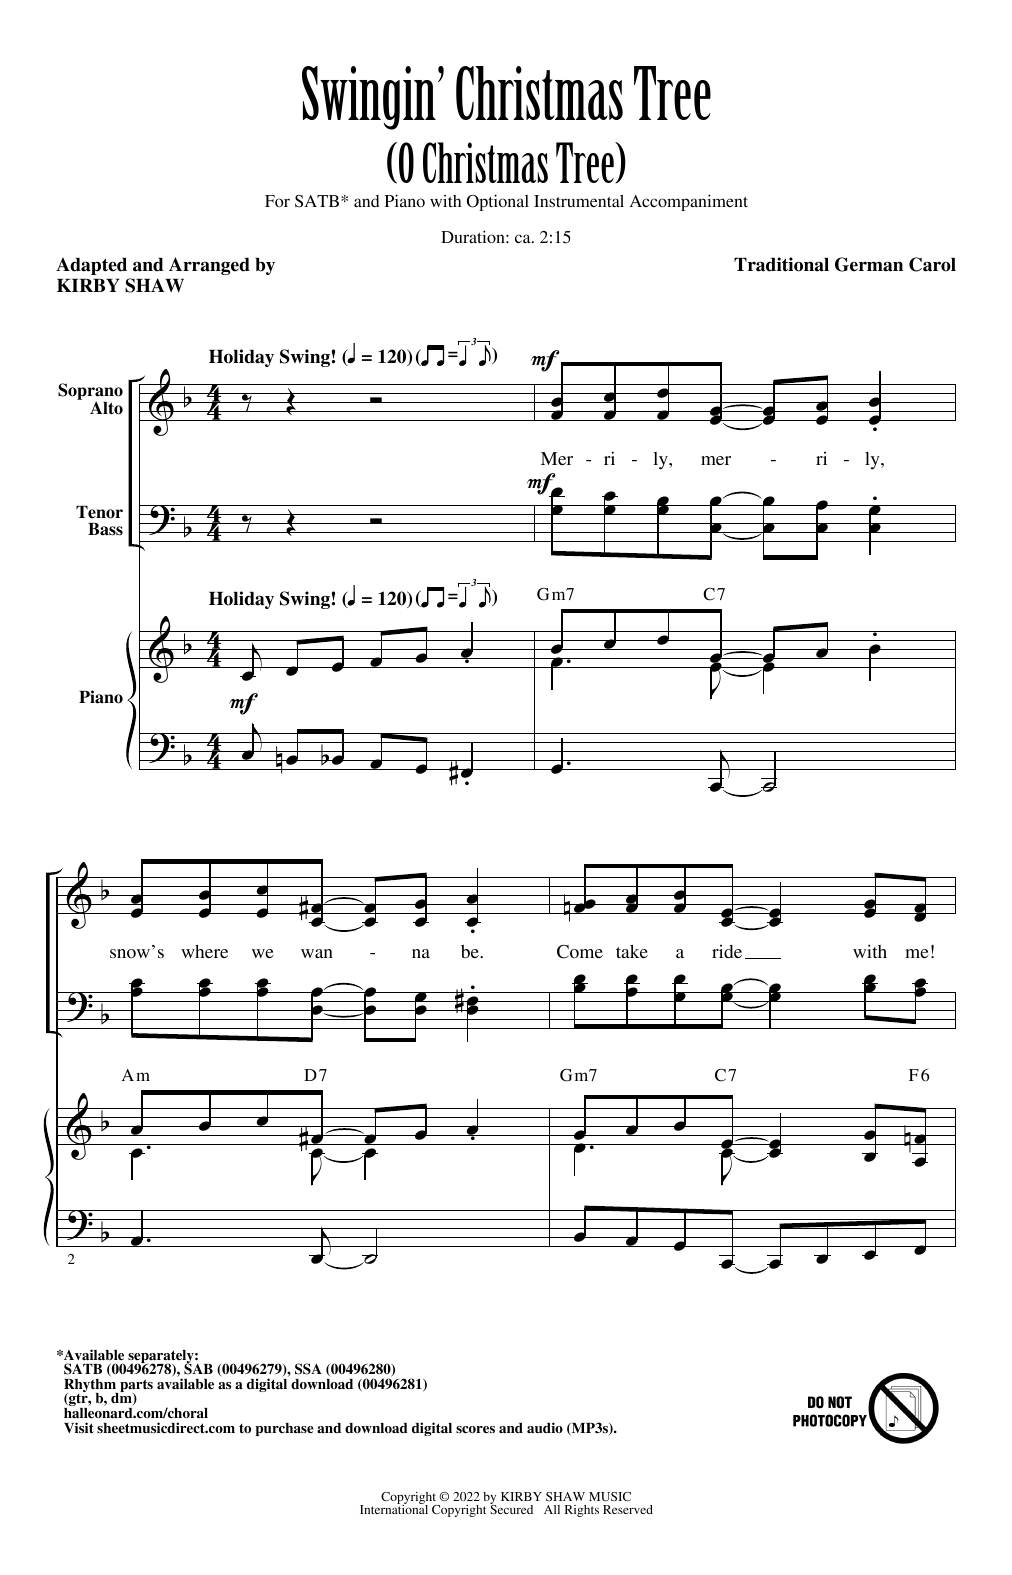 Traditional German Carol Swingin' Christmas Tree (O Christmas Tree) (arr. Kirby Shaw) Sheet Music Notes & Chords for SAB Choir - Download or Print PDF